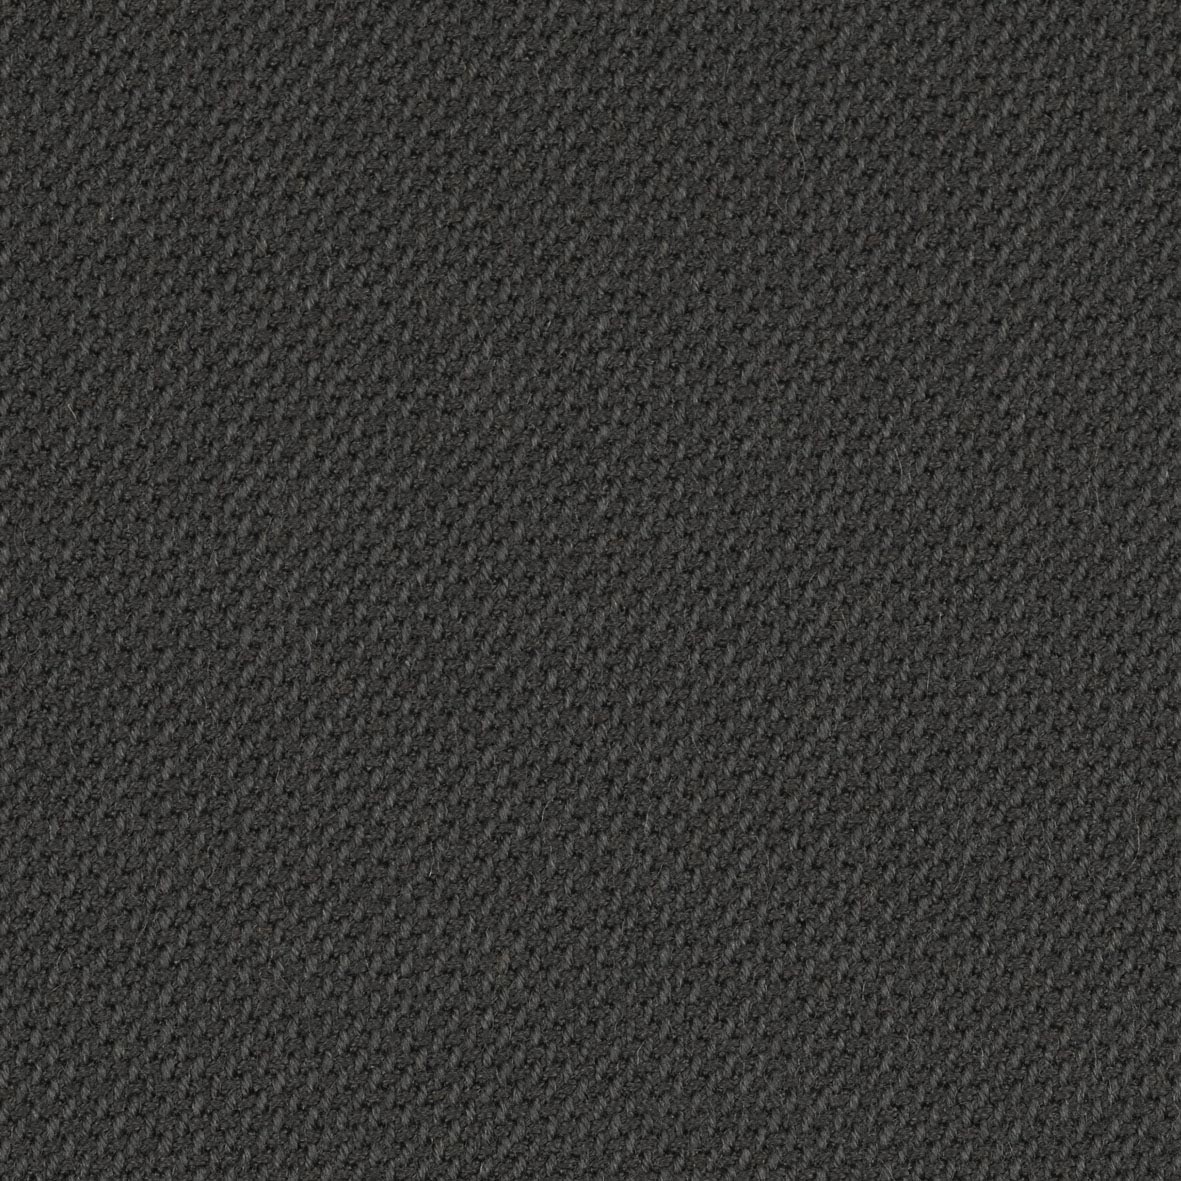 Office chair H&#197;G Capisco 8106, dark gray fabric upholstery black base